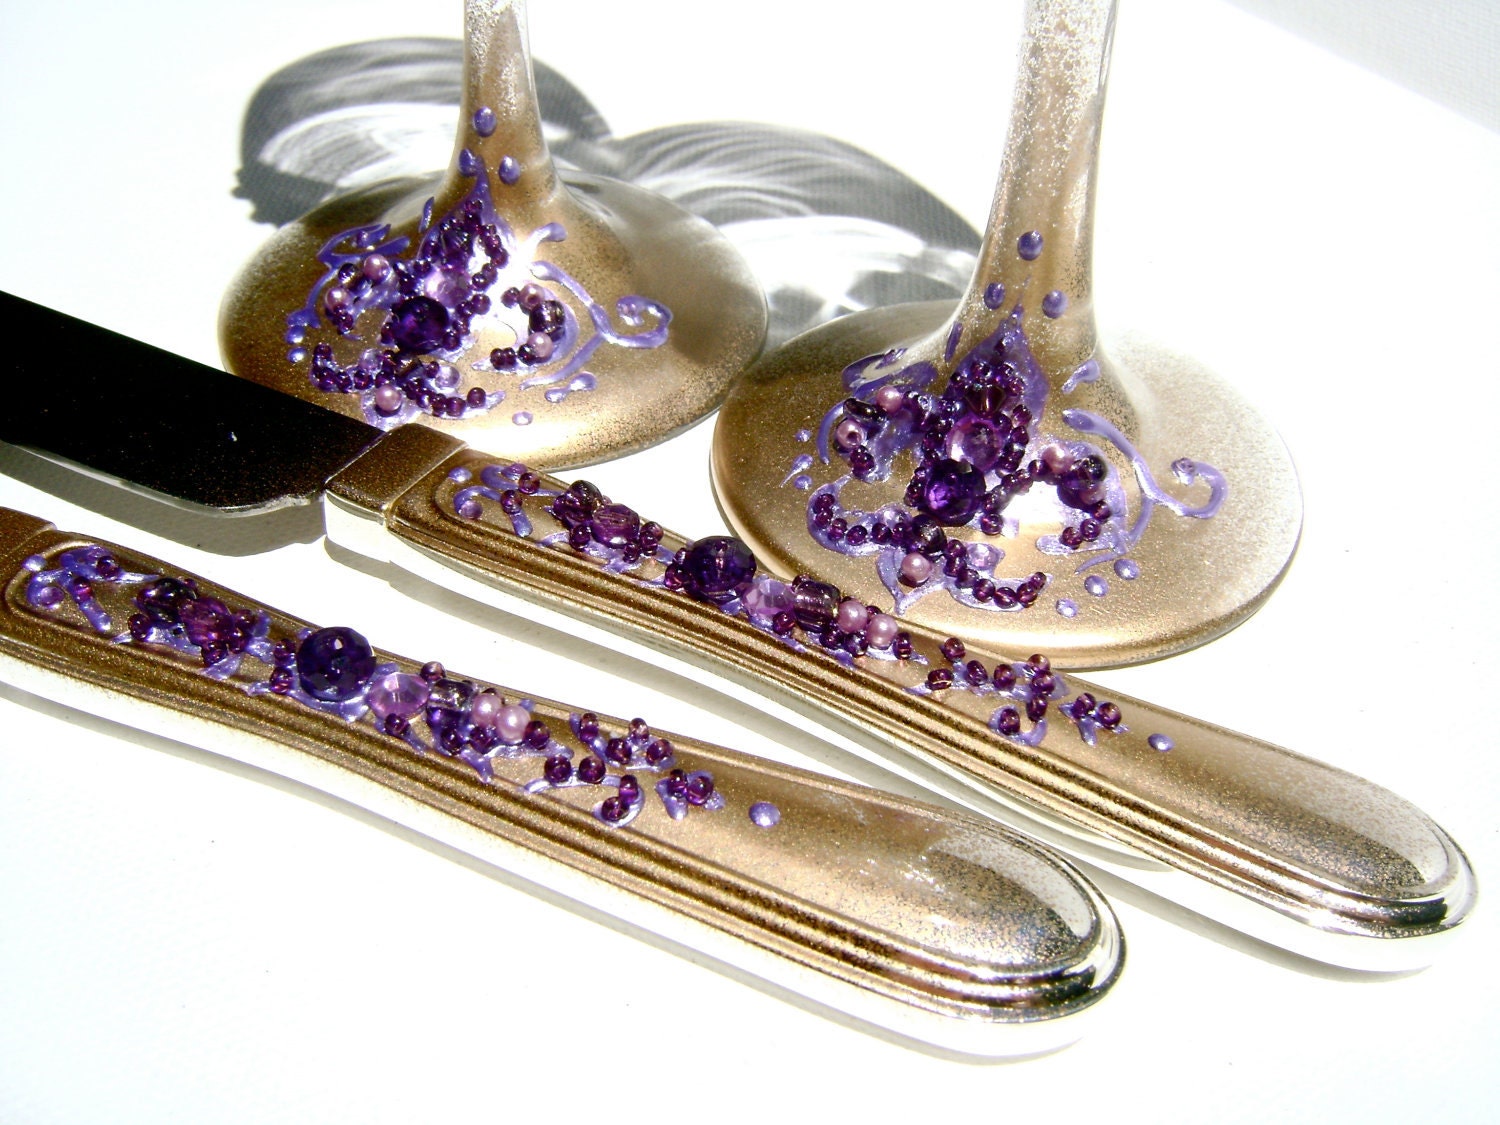  Elegant  wedding  cake  serving  set  hand decorated with purple